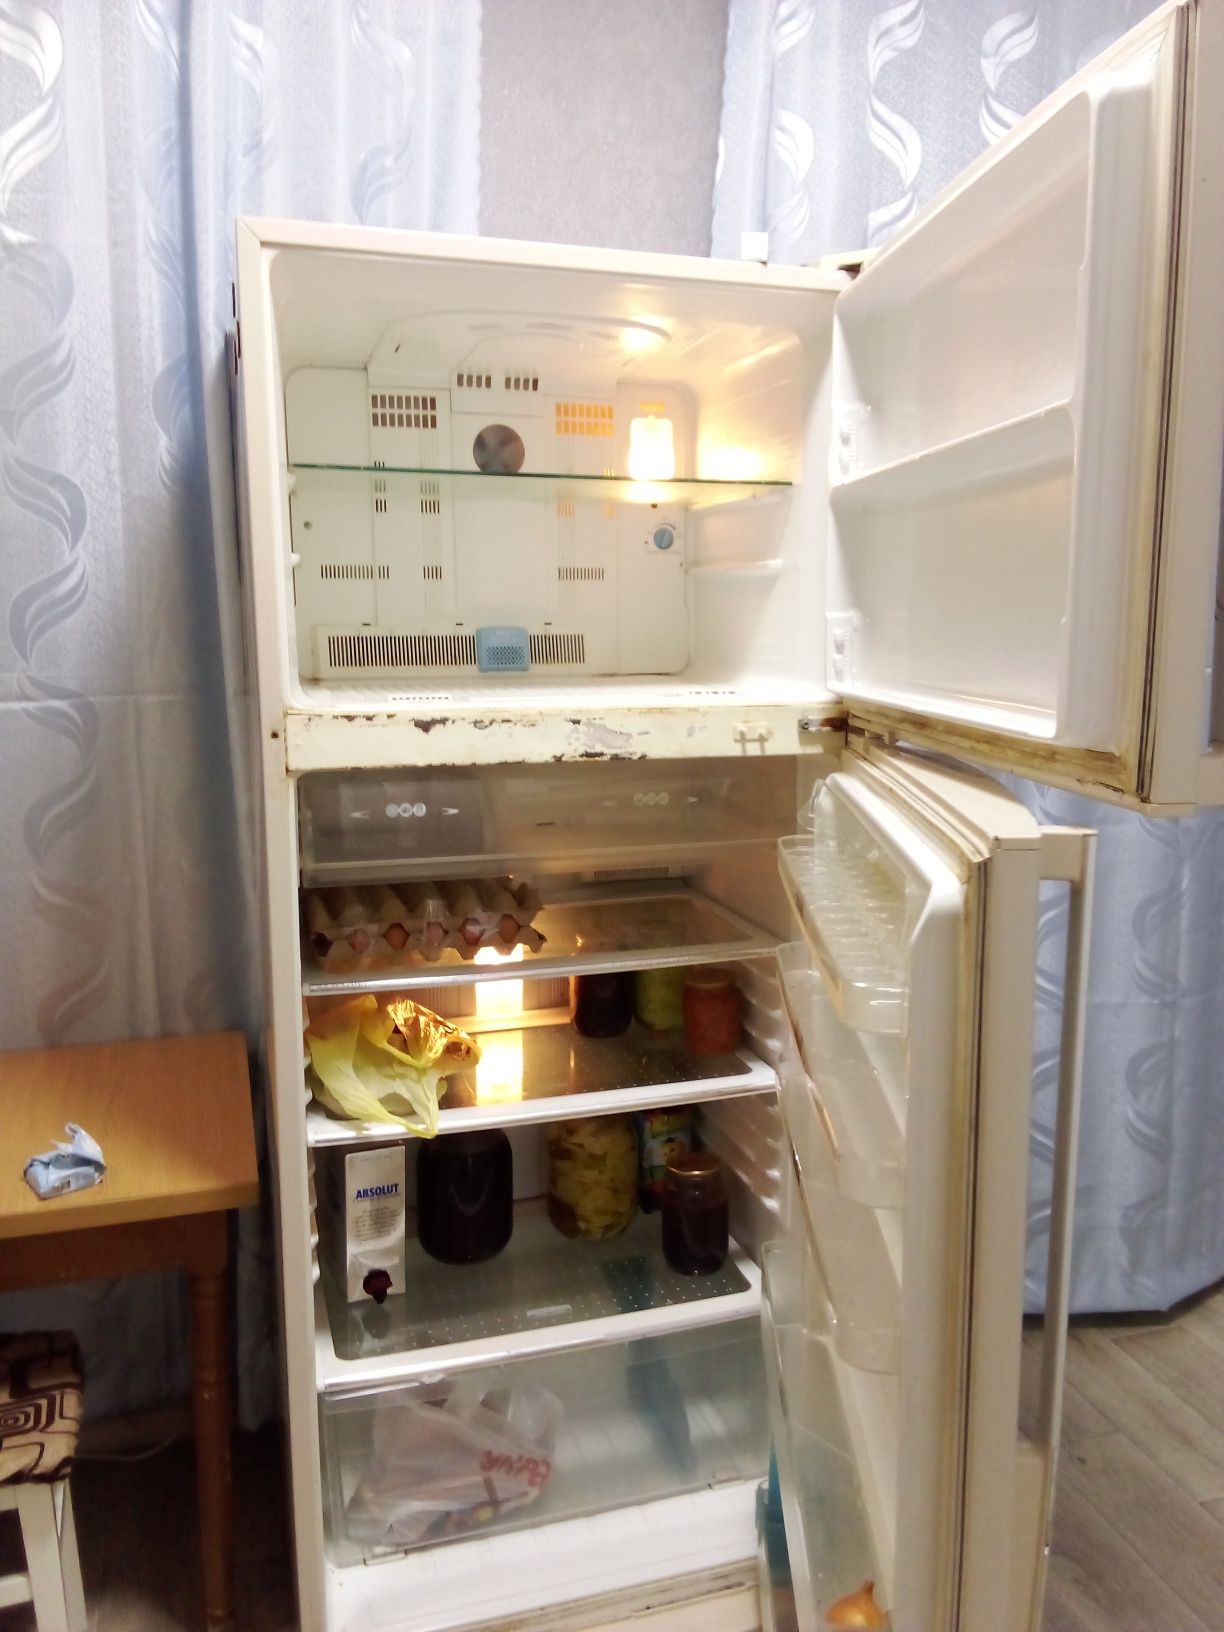 Холодильник б/у. Шарп